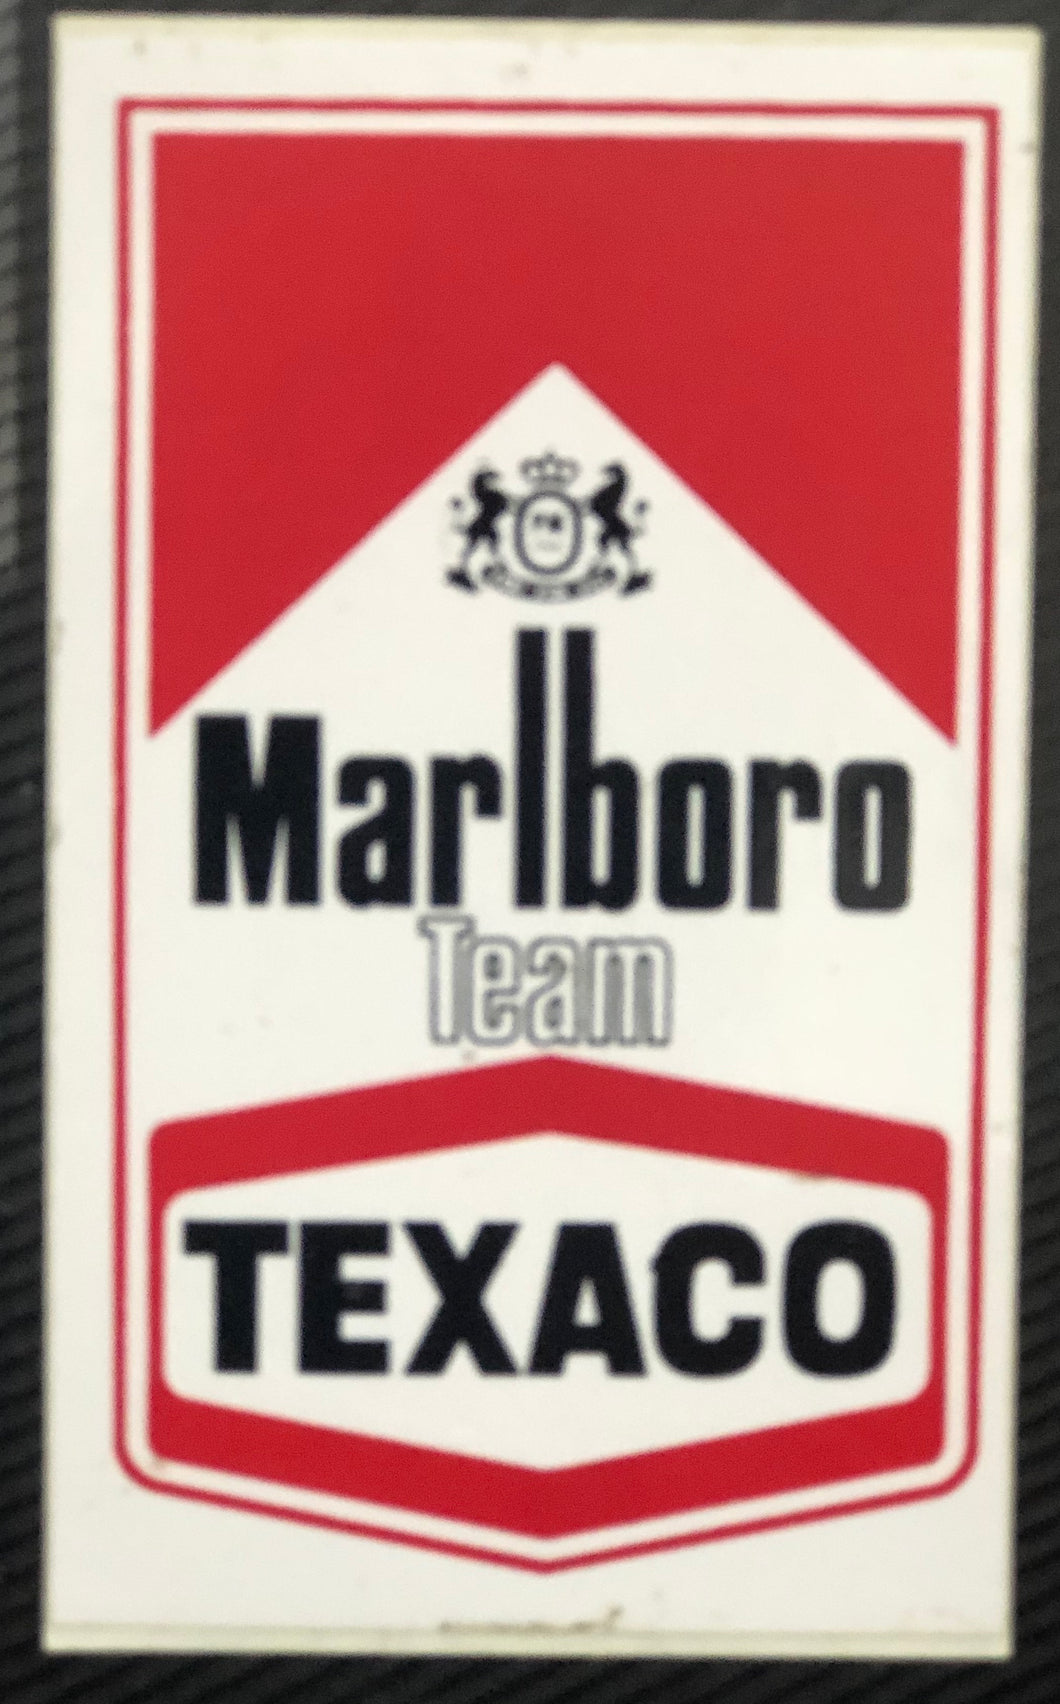 Marlboro team Texaco - Team Shield Rectangle